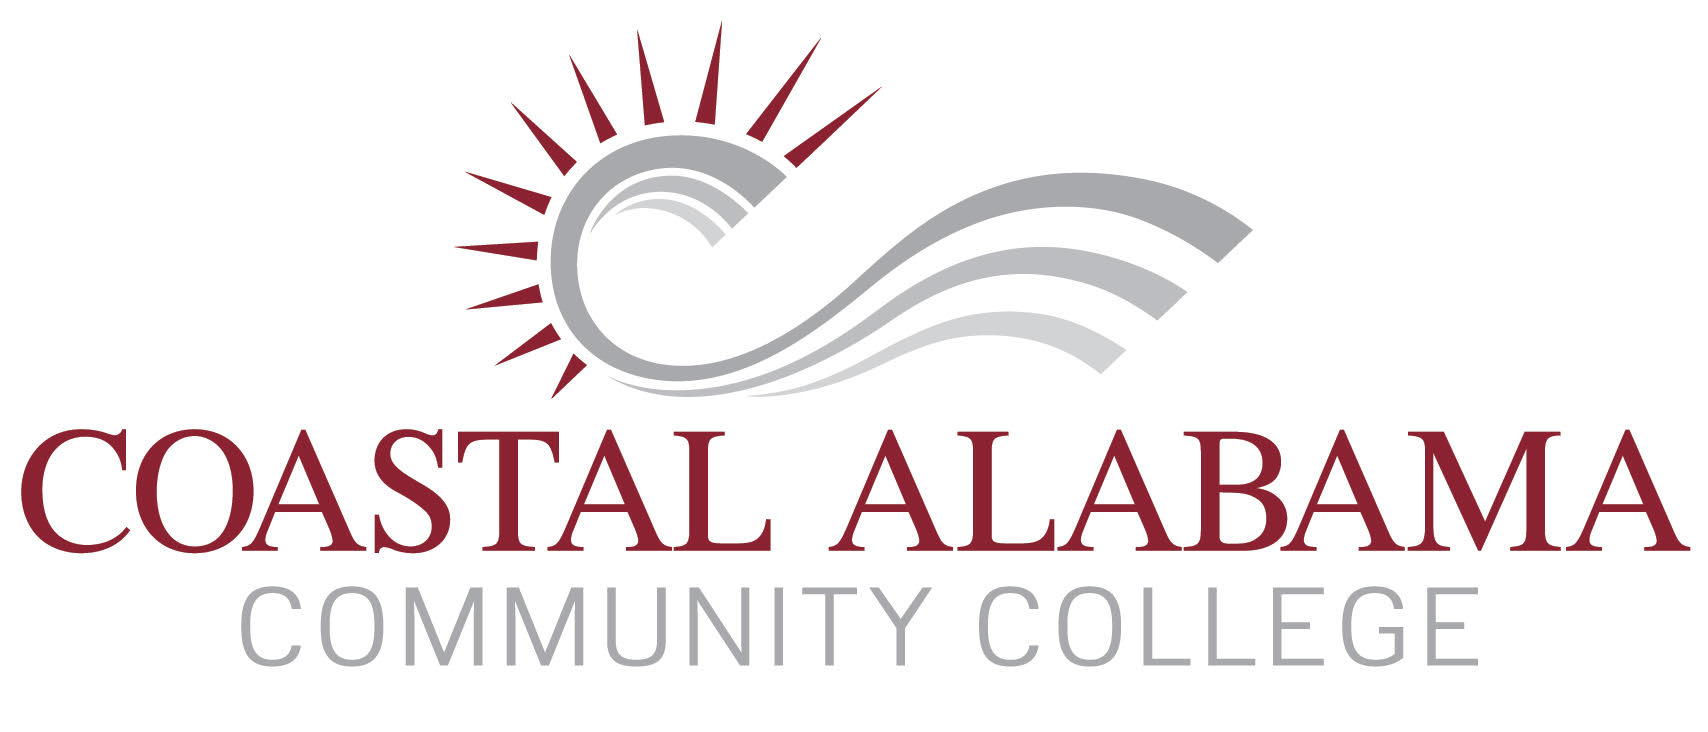 Coastal Alabama Community College Logo - Mechanic Schools in Alabama